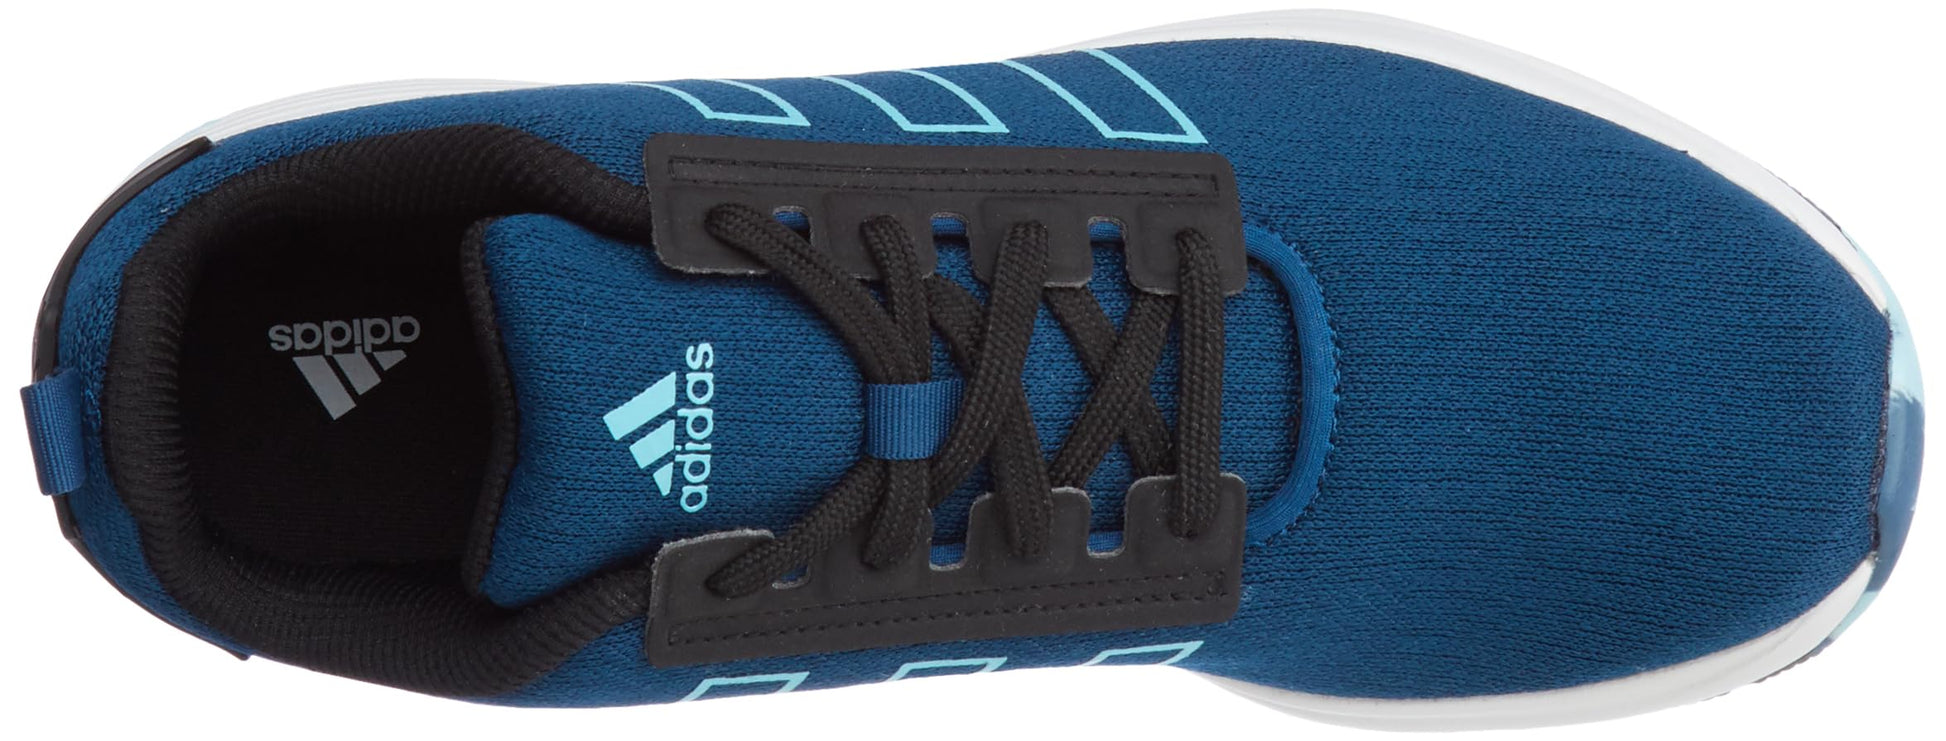 Adidas Men Synthetic & Textile JAW Drop M Running Shoes BLUNIT/BLIBLU/CBLACK UK-7 